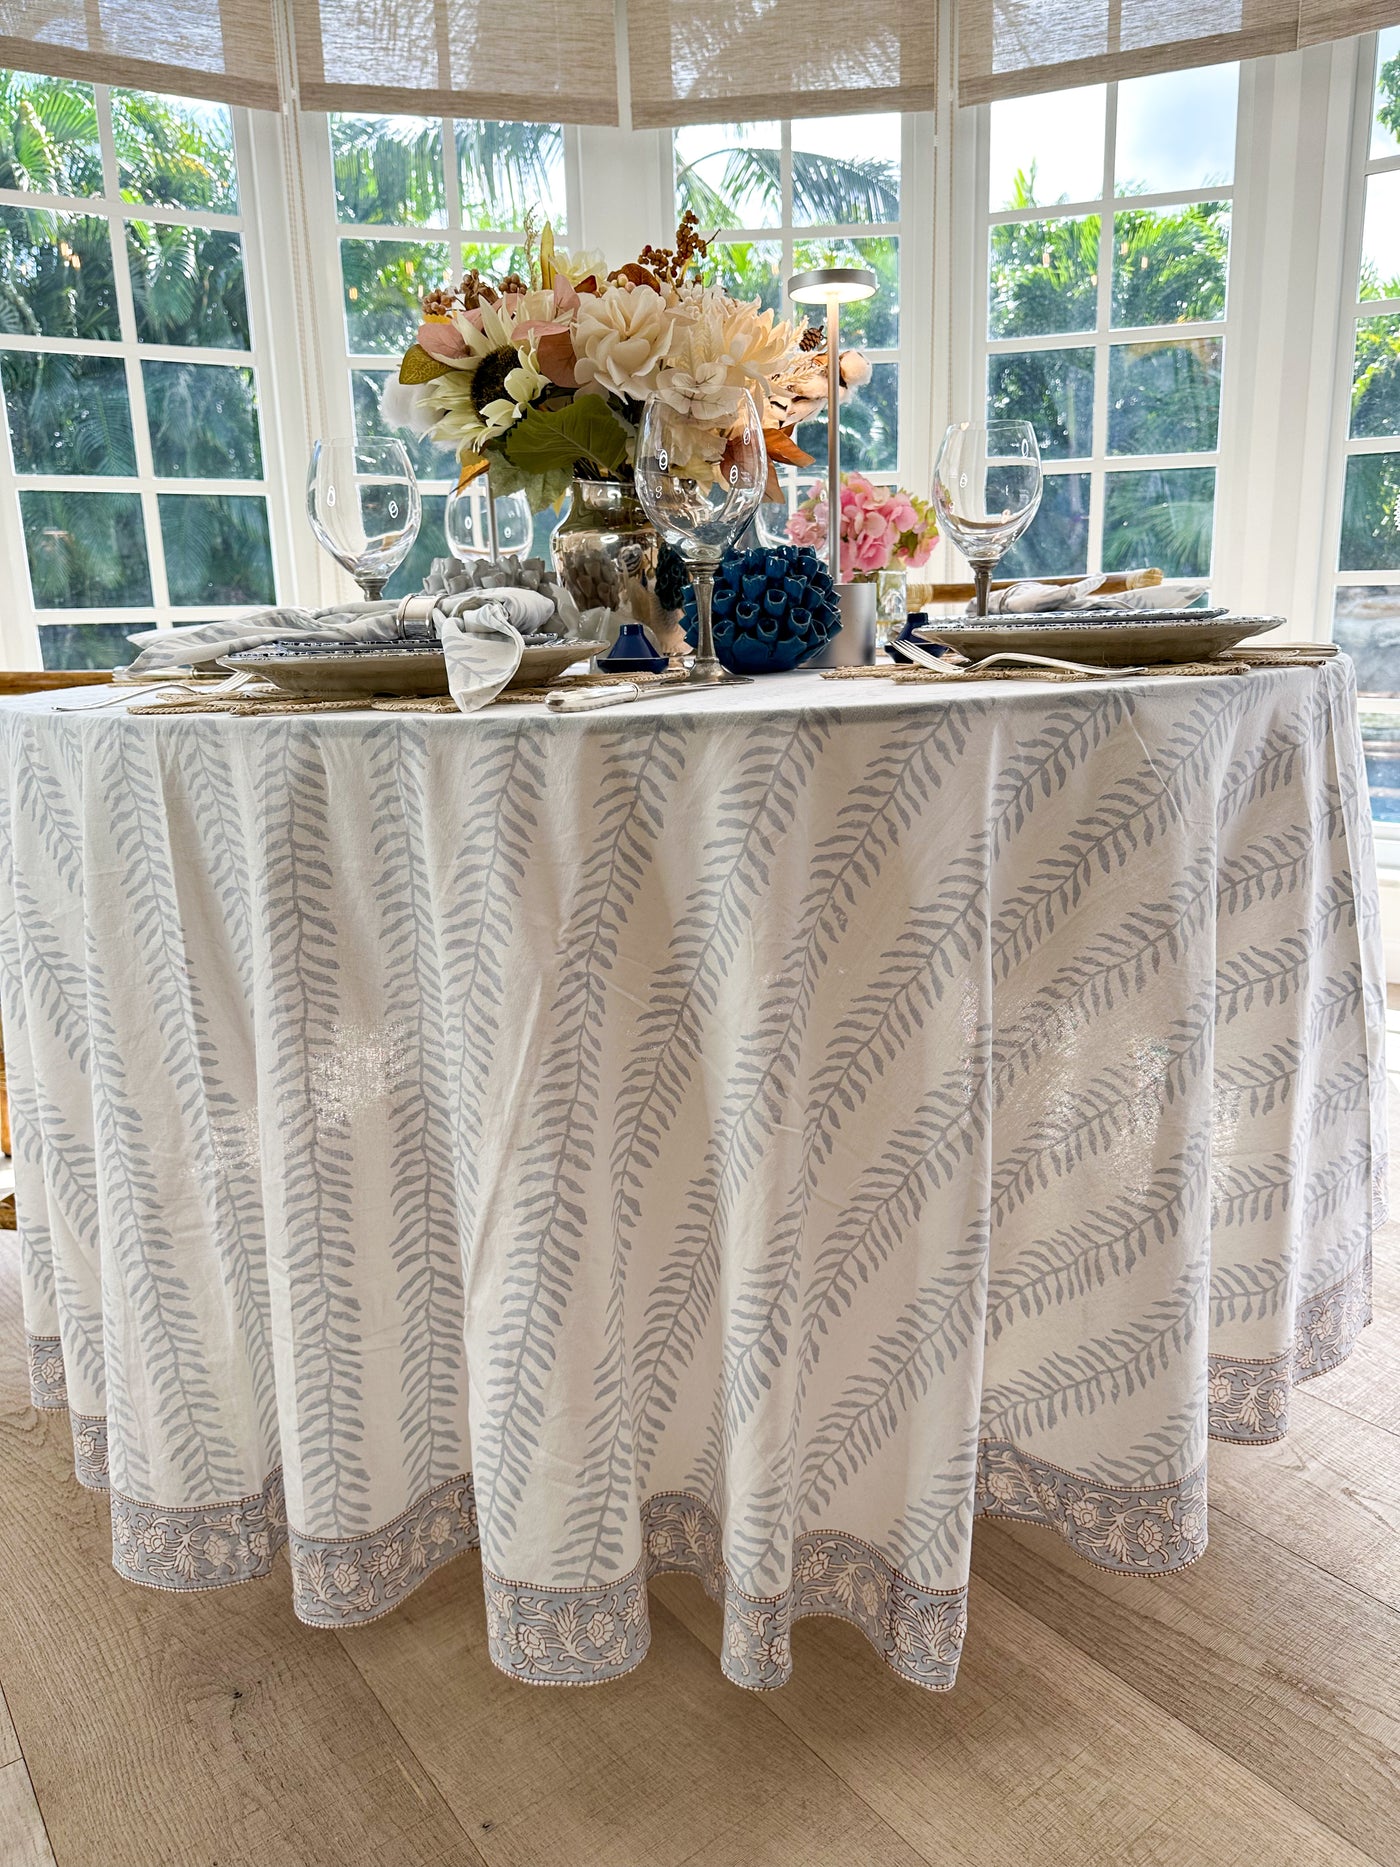 The Silver/Blue Trellis Tablecloth